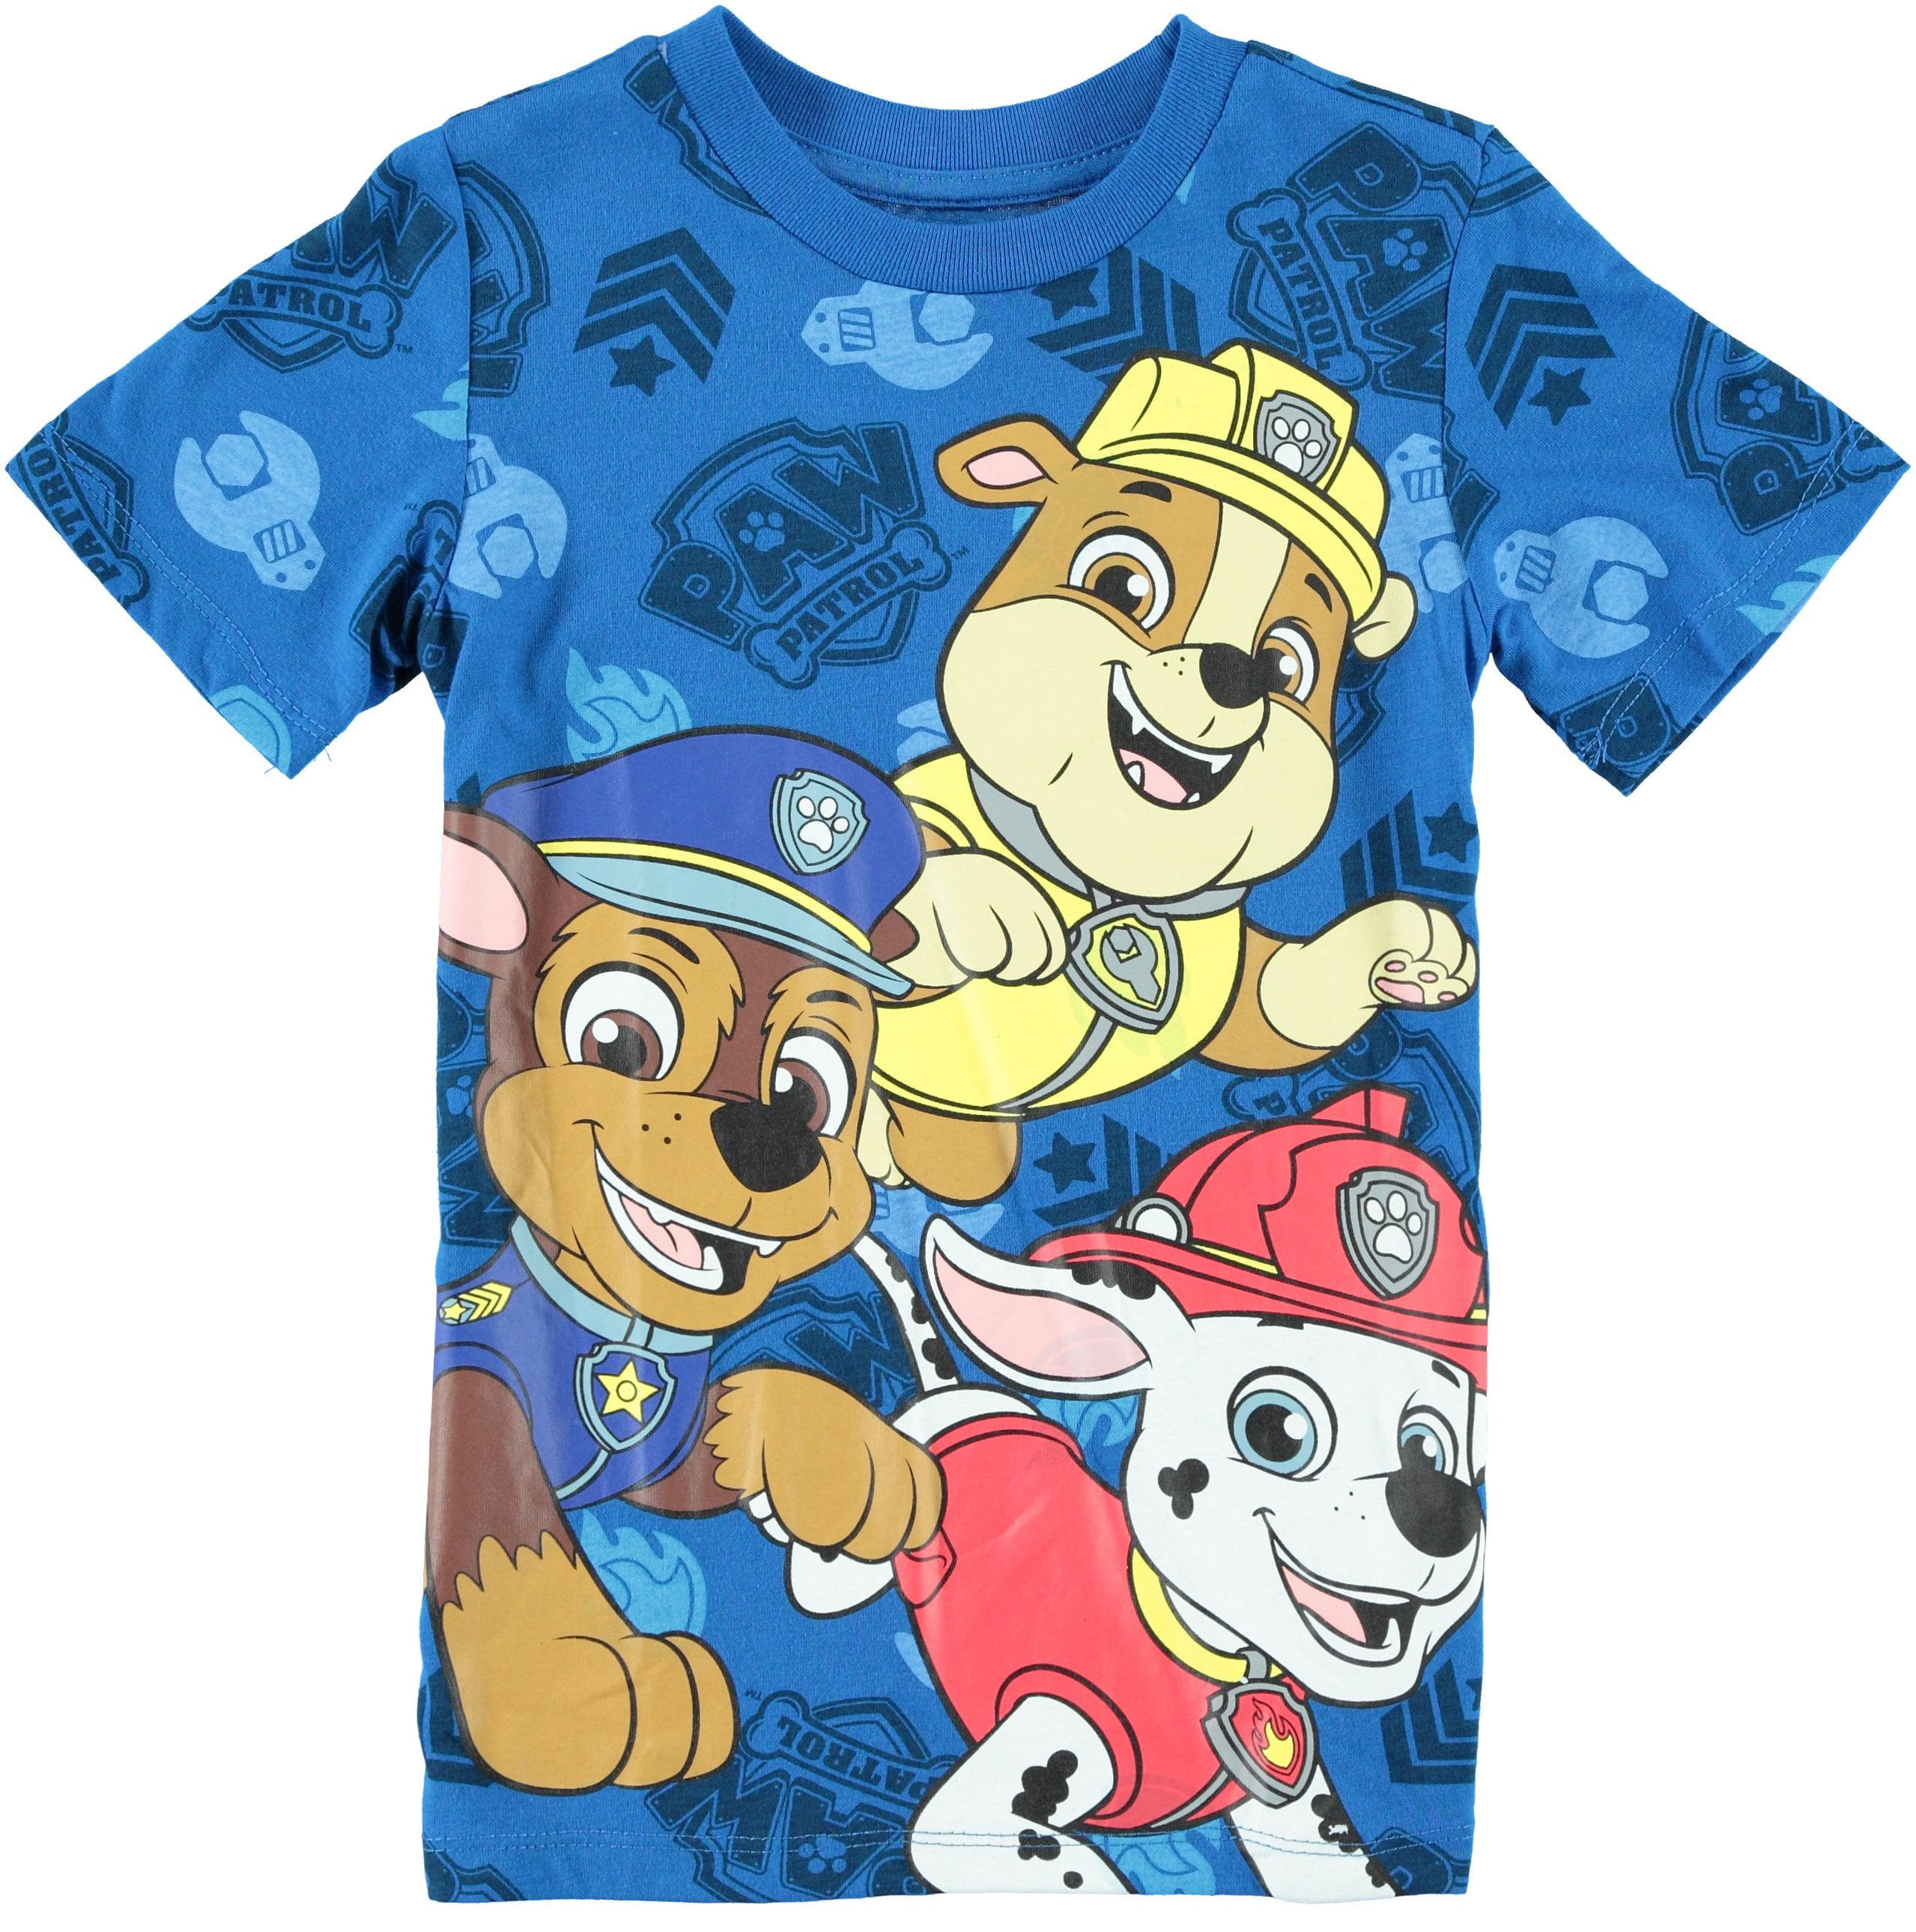 Paw Patrol Boys Crew Neck T-Shirt - Marshall, Chase & Rubble - Sizes 4 ...